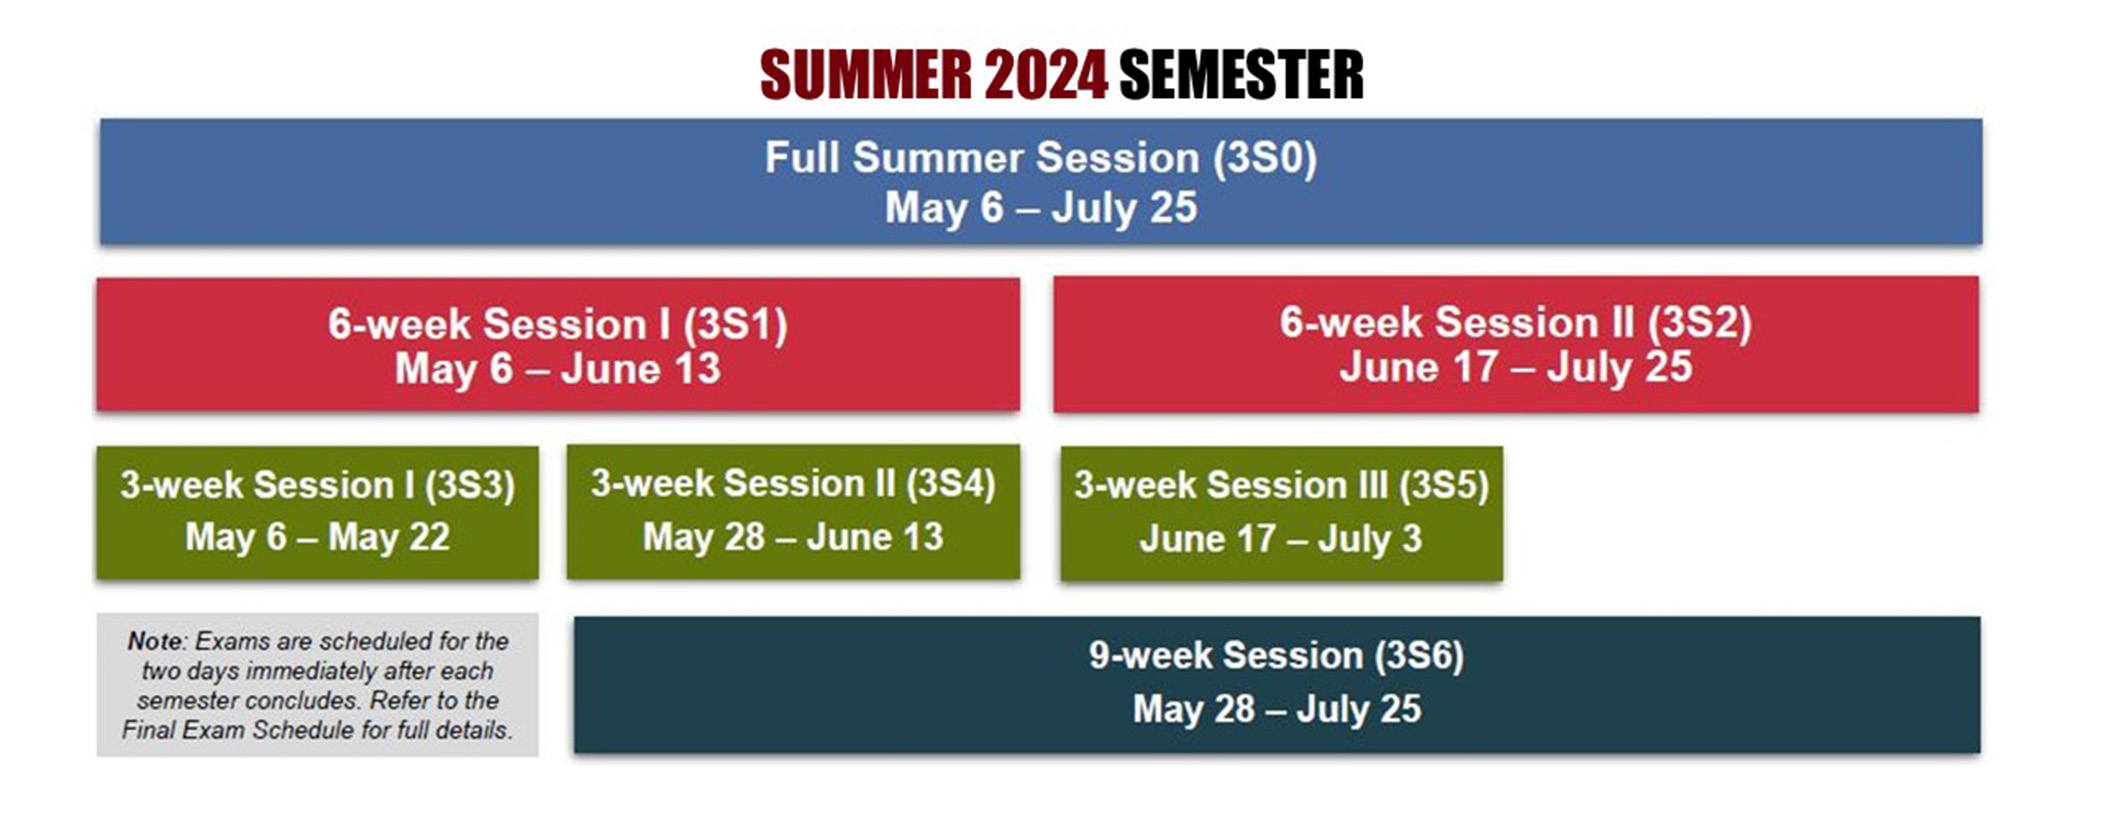 Summer 2024 Schedule University Registrar University of South Carolina